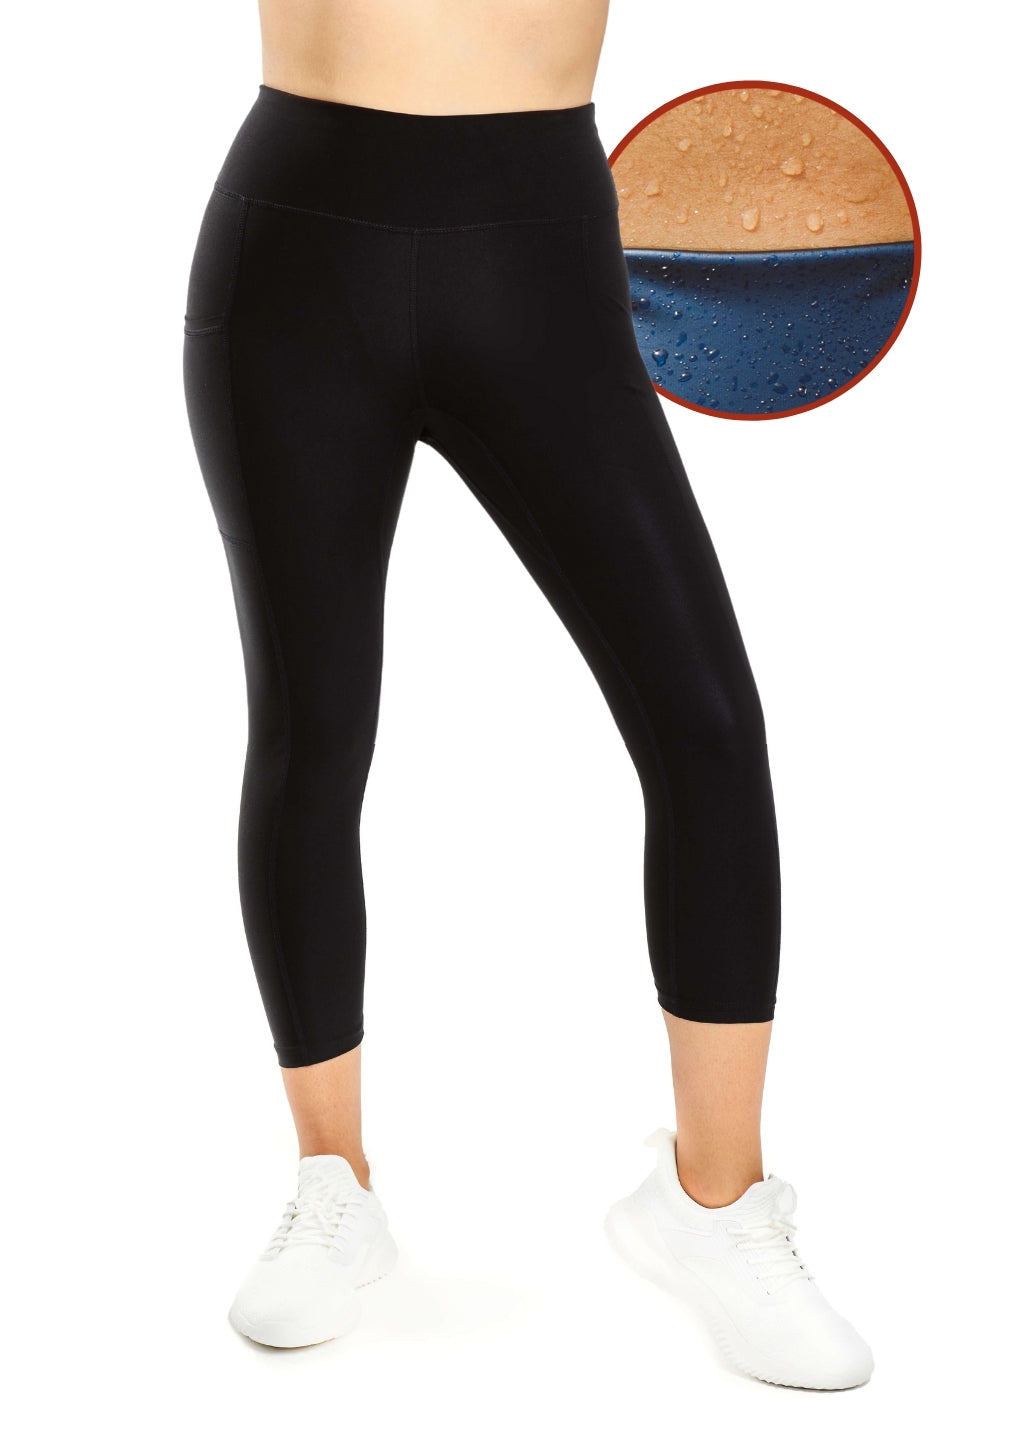 SweatyRocks Women's Legging Mesh Insert Ripped Tights Yoga Slim Pants,  Black #1, X-Small : : Clothing, Shoes & Accessories